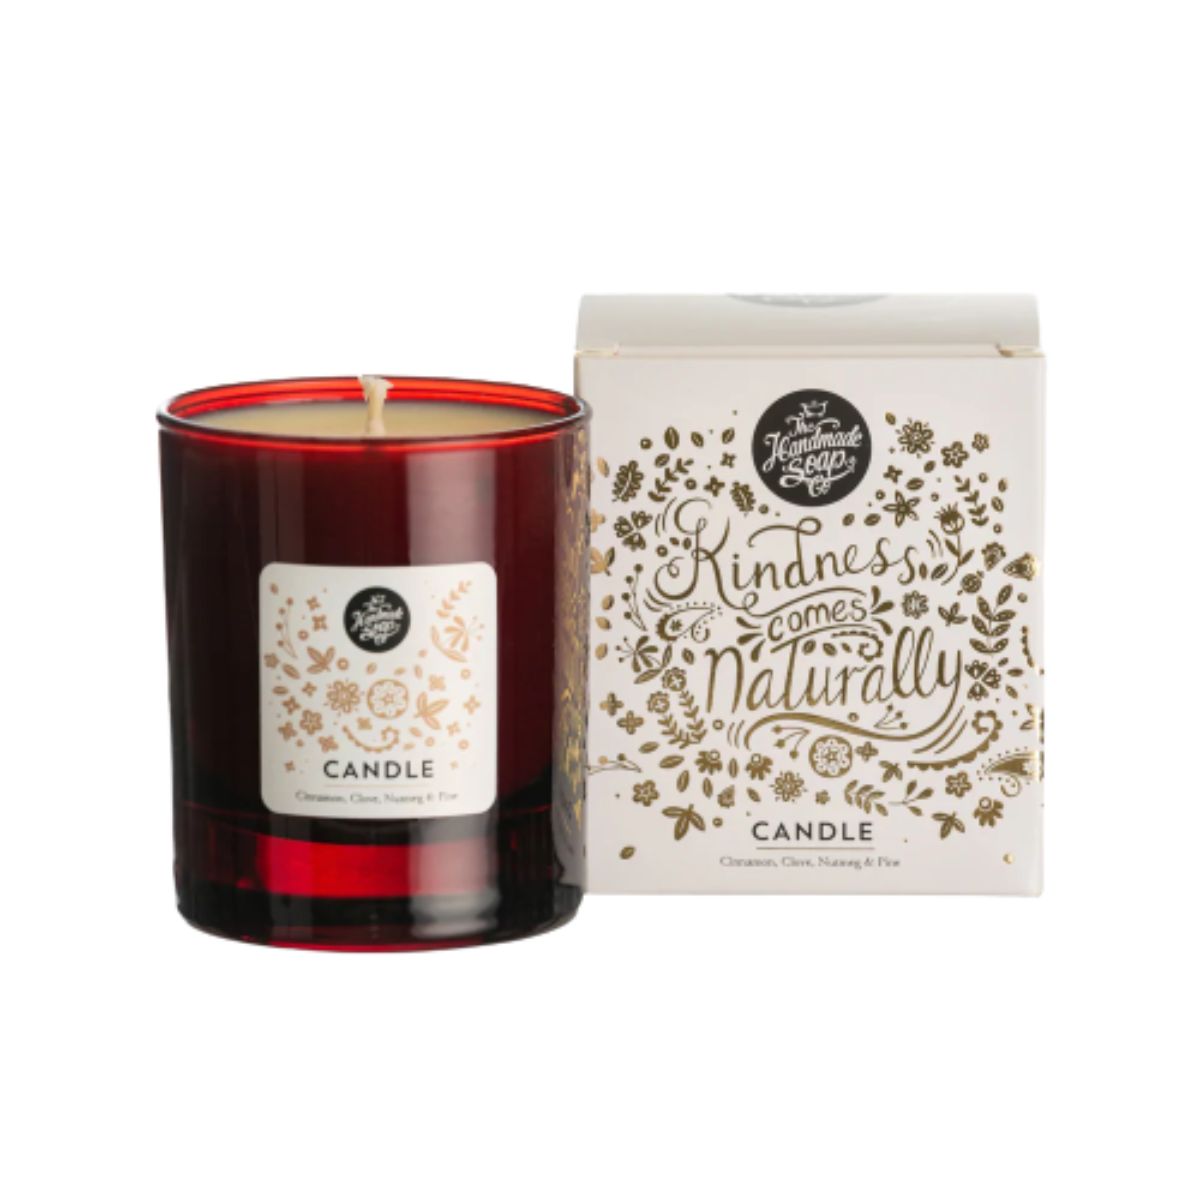 The Handmade Soap Company Soy Wax Candle - Cinamon, Clove, Nutmeg & Pine